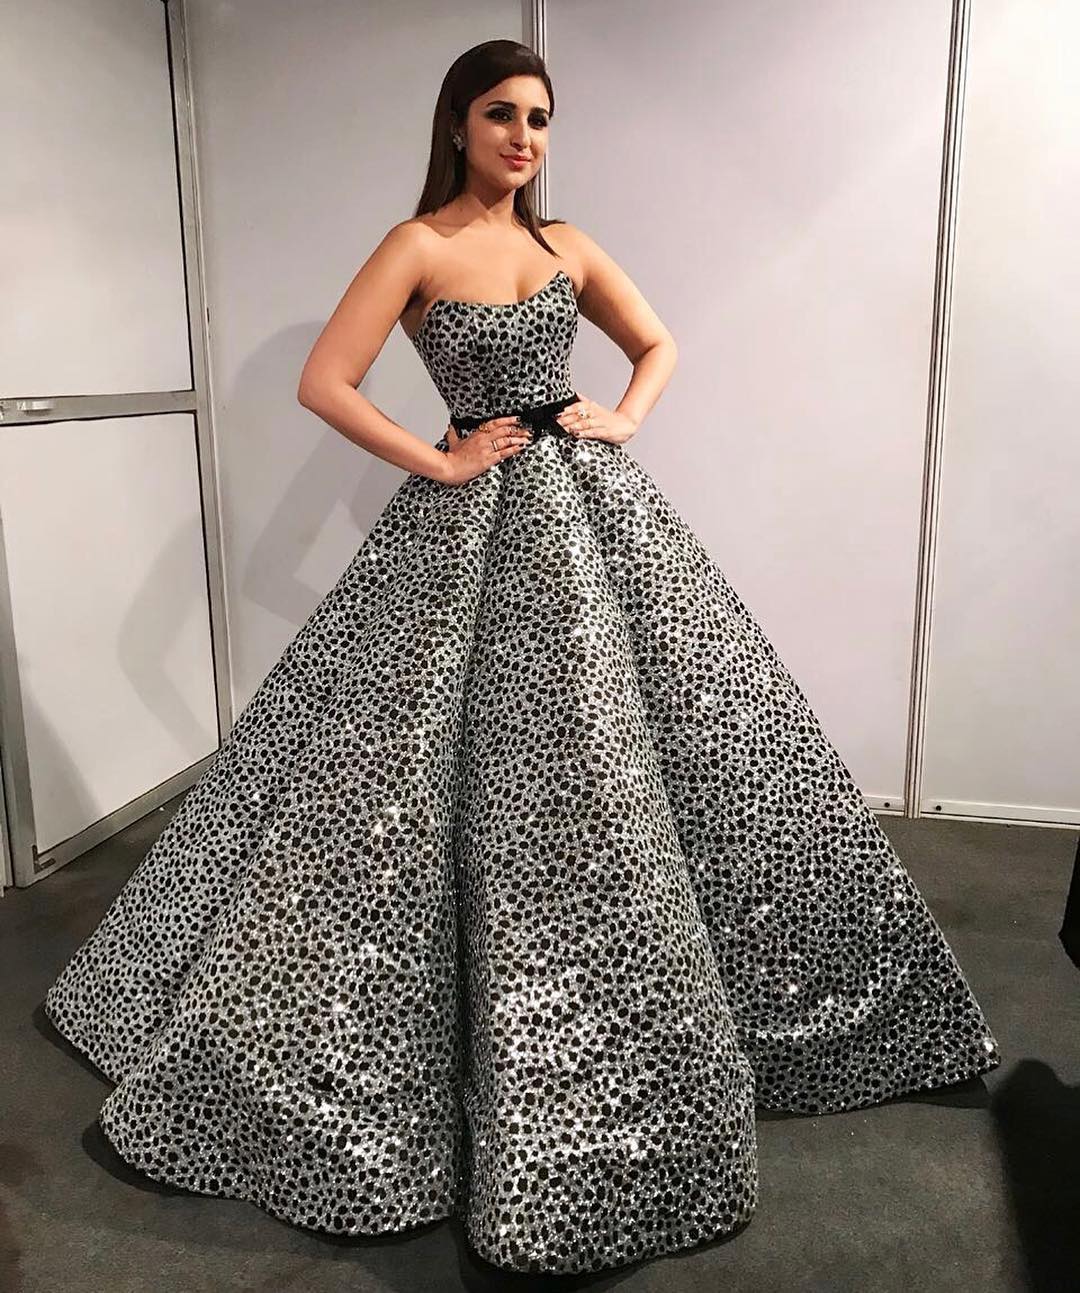 Parineeti Chopra Looked Like A Barbie Doll At Jio Filmfare Awards 2018